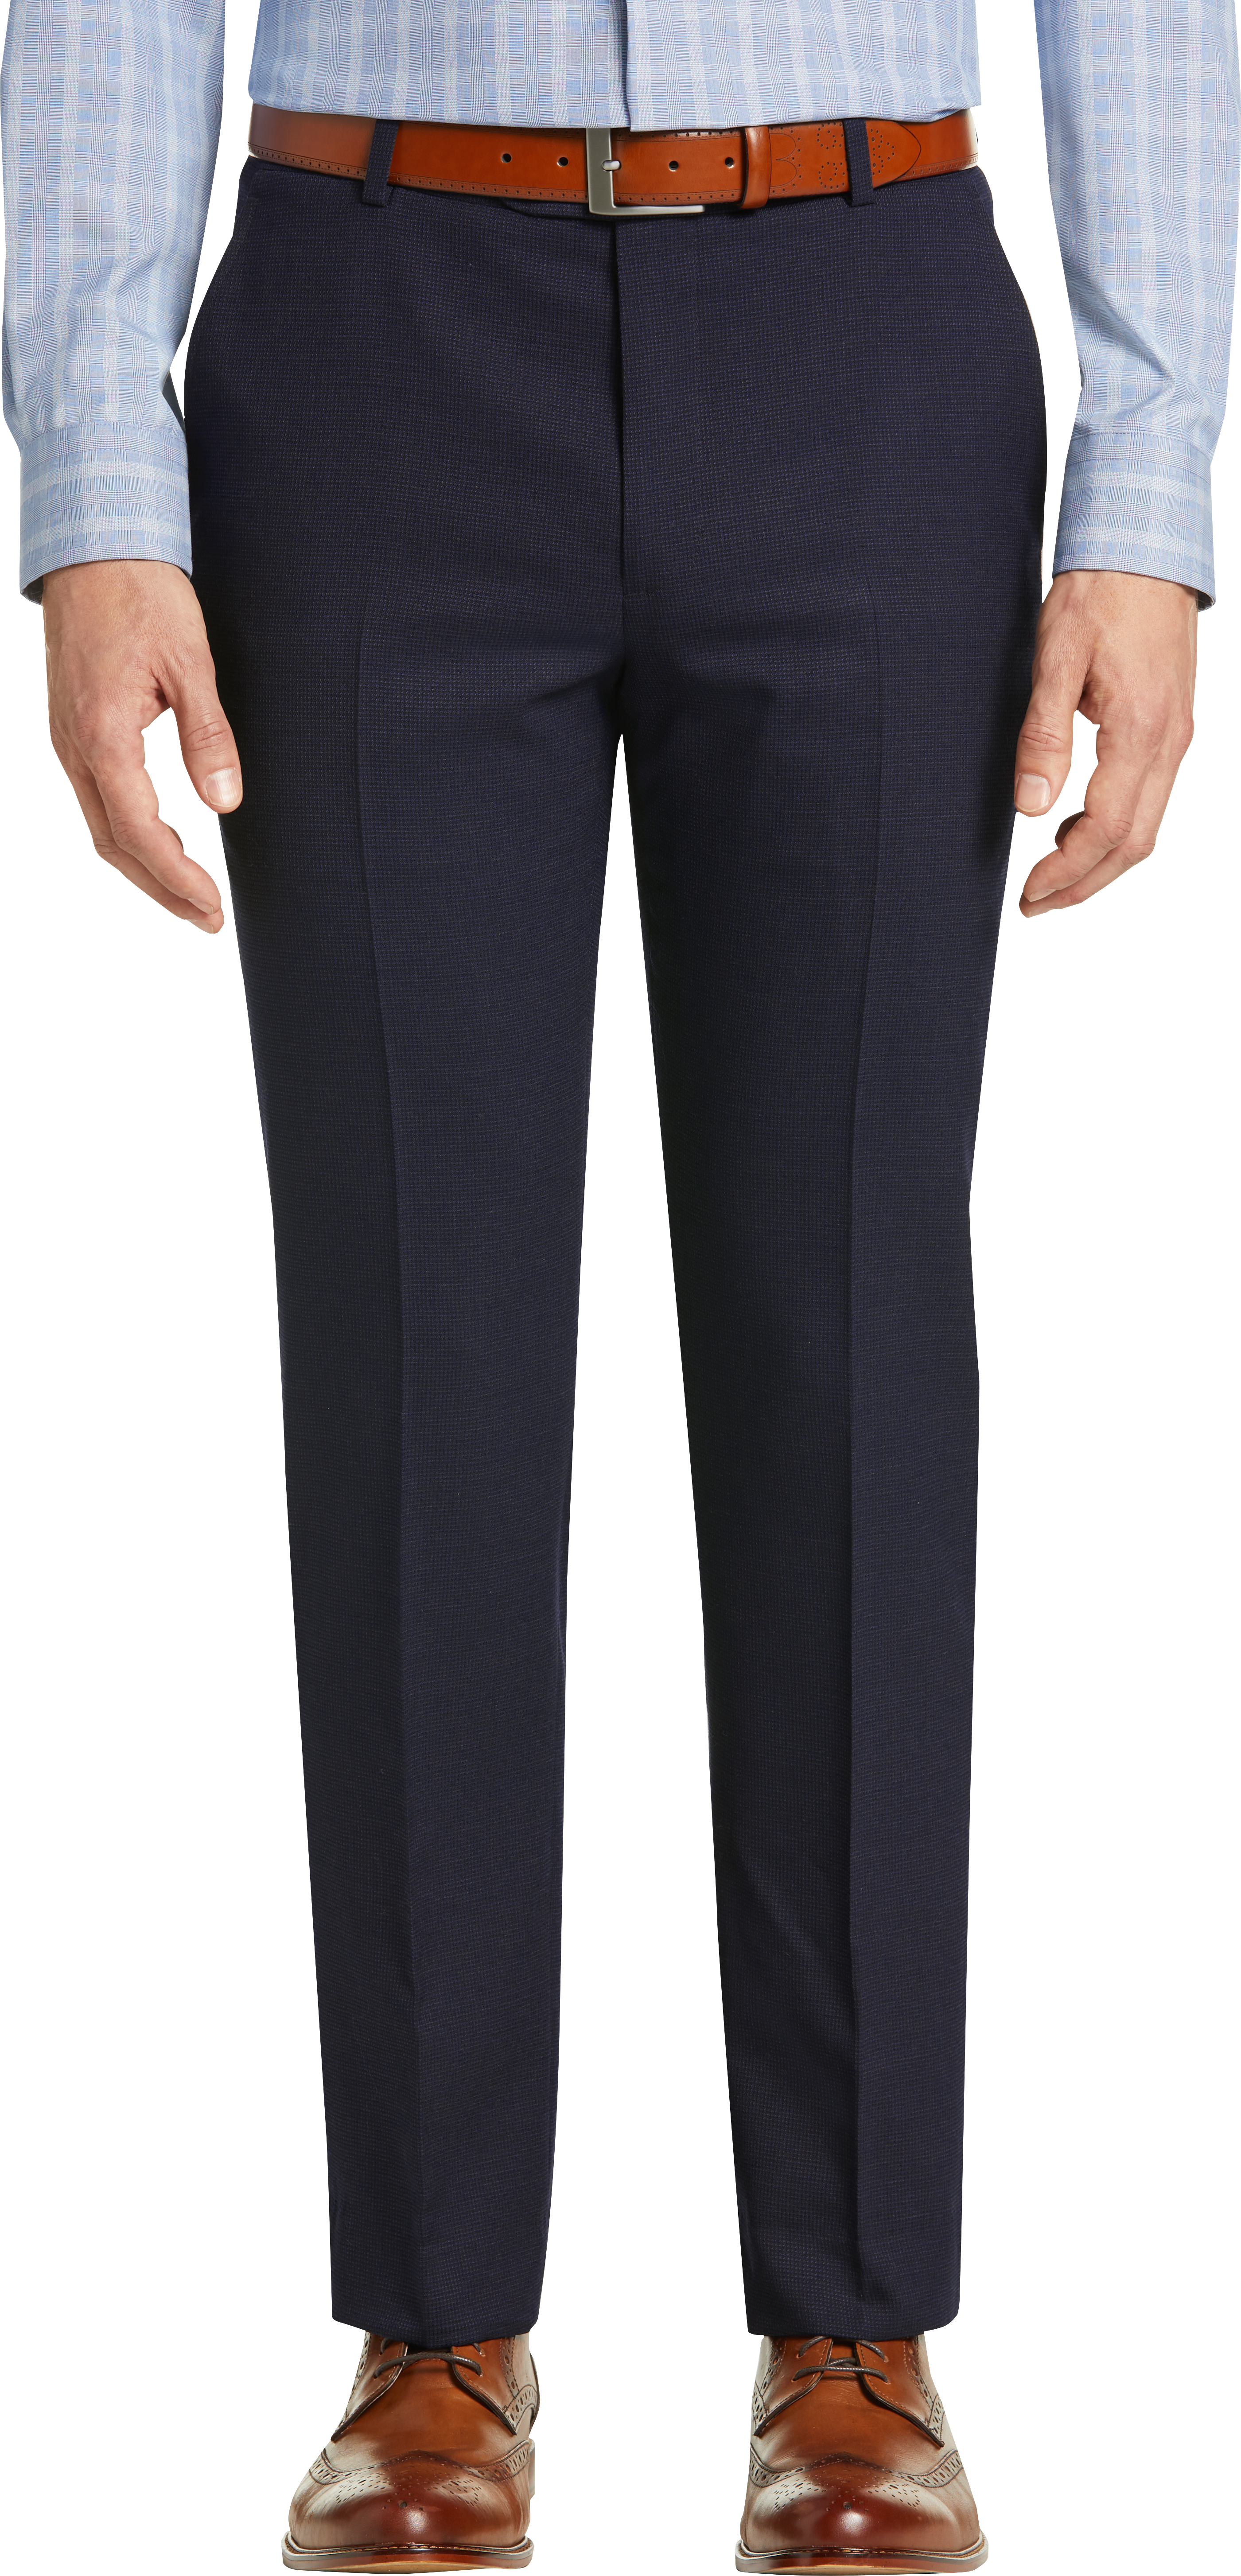 JOE Joseph Abboud Navy Slim Fit Dress Pants - Men's Sale | Men's Wearhouse